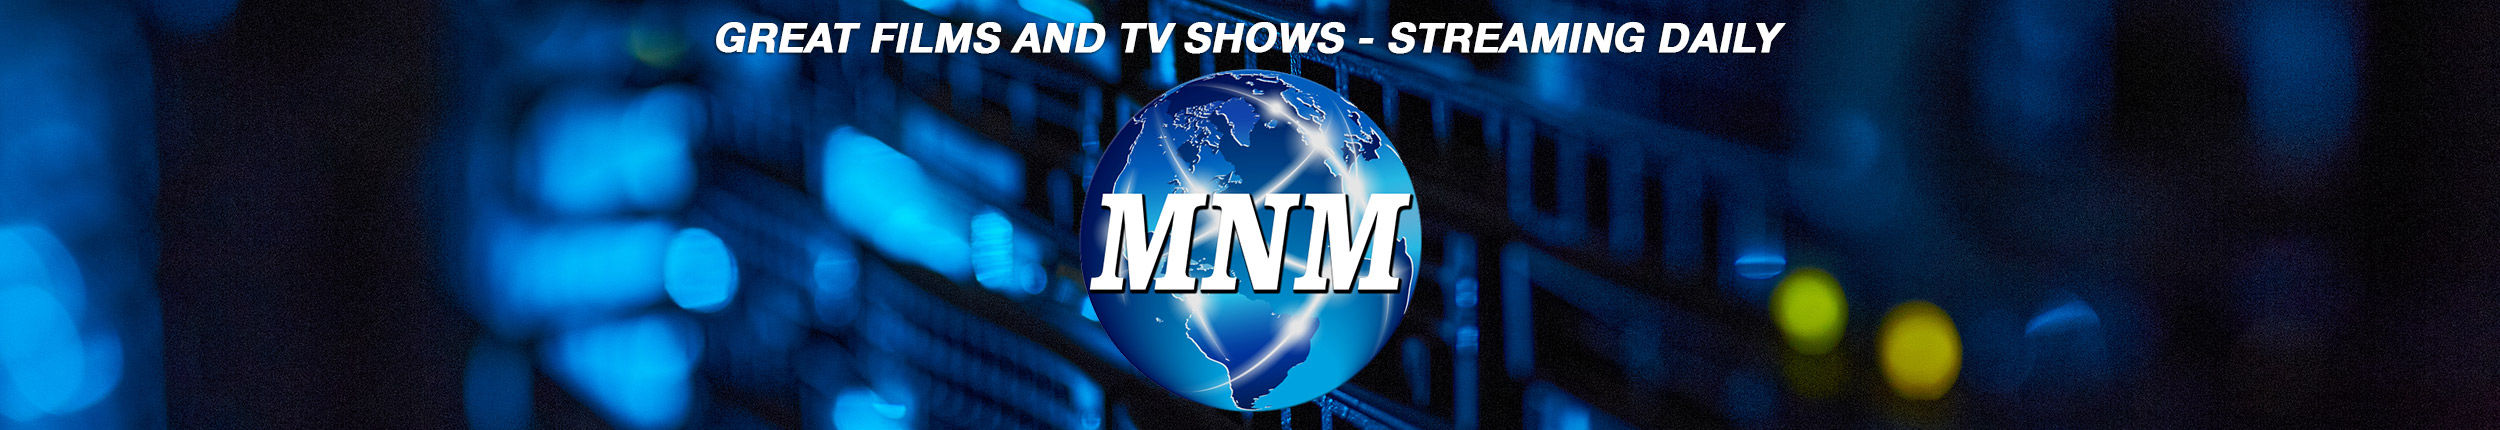 MNM - Muslim News Magazine